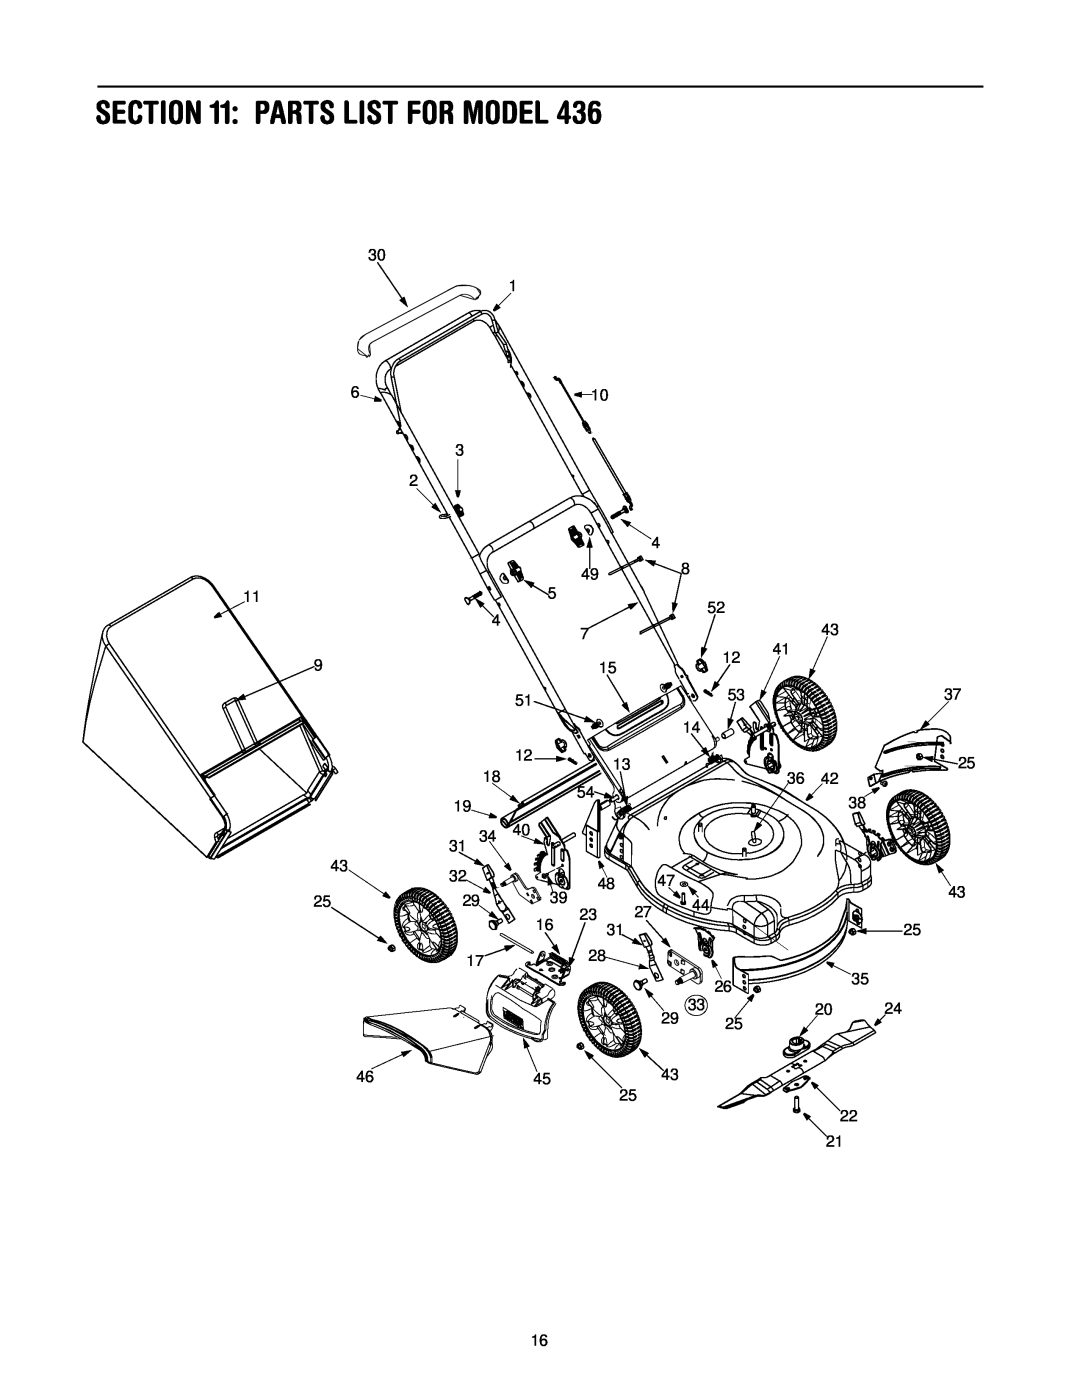 Troy-Bilt 436 manual Parts List For Model 